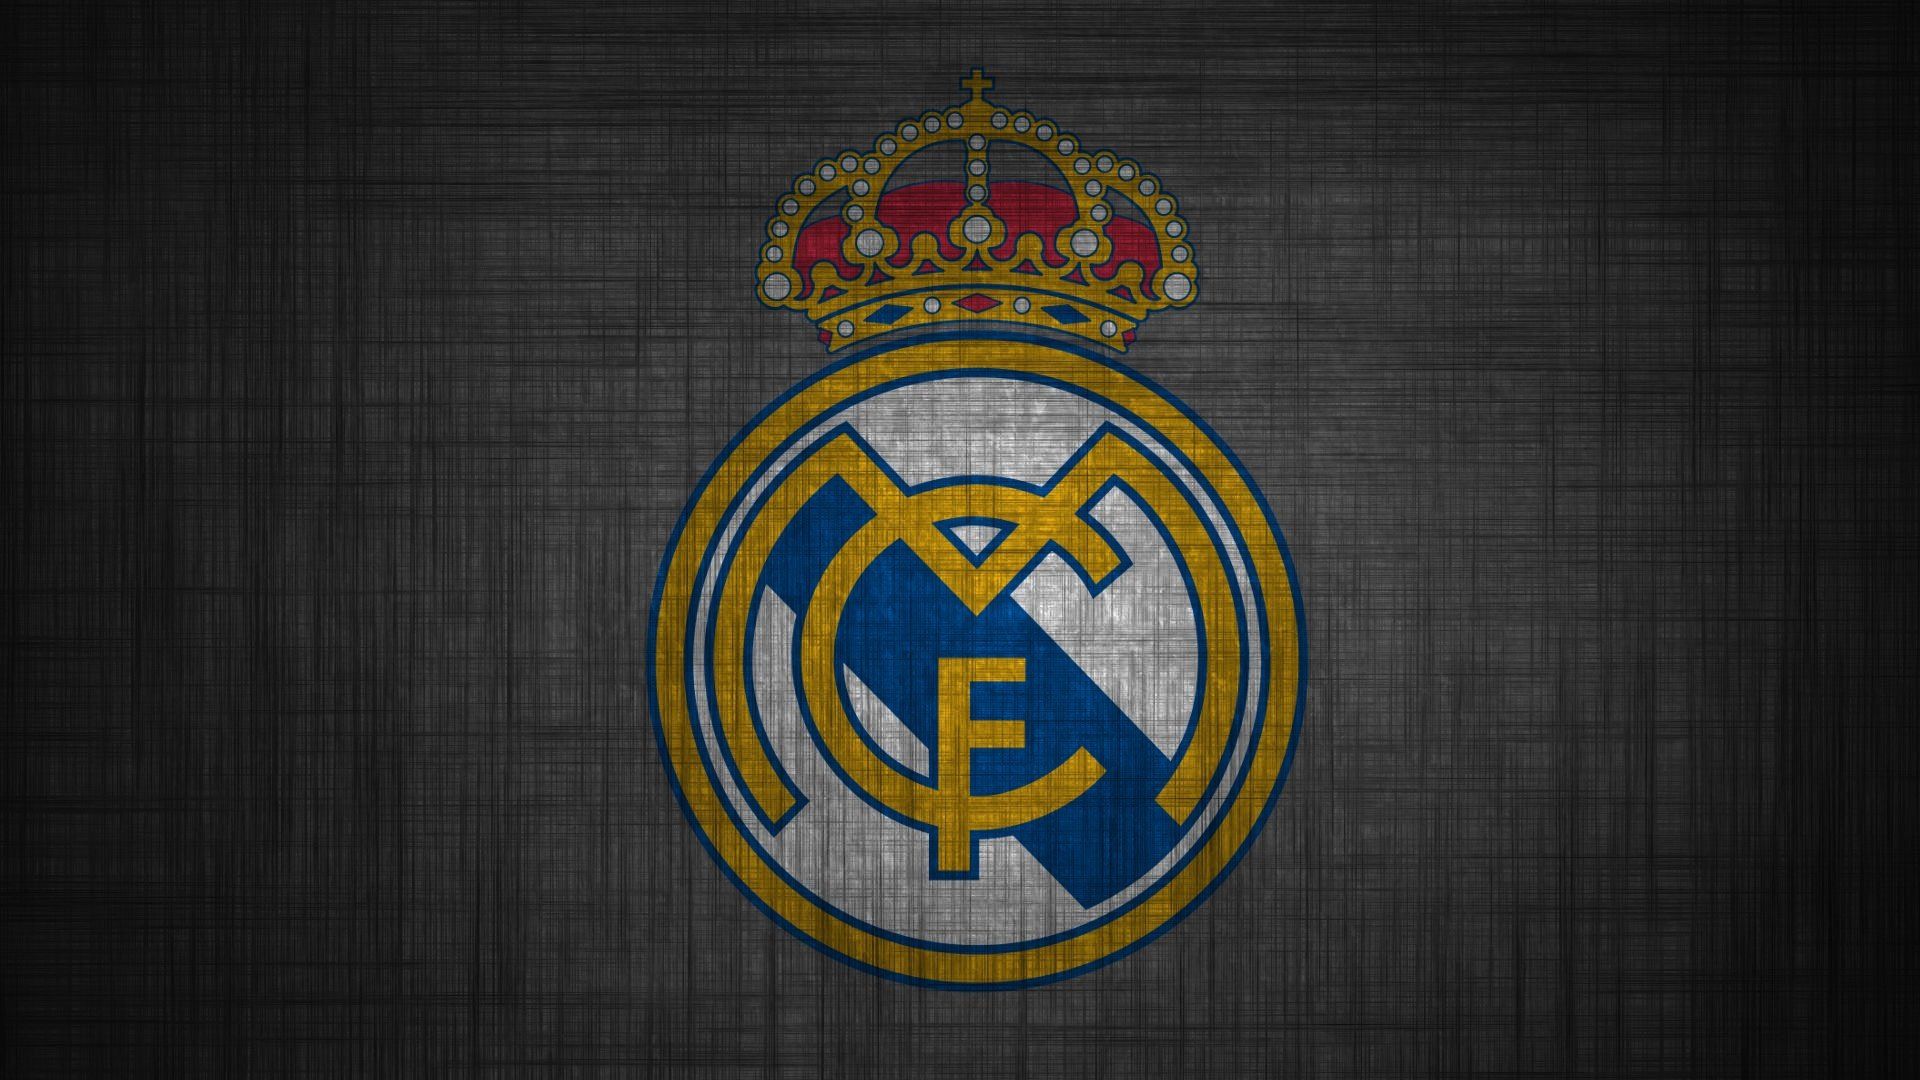 Real Madrid 4k Wallpaper At Wallpaperbro